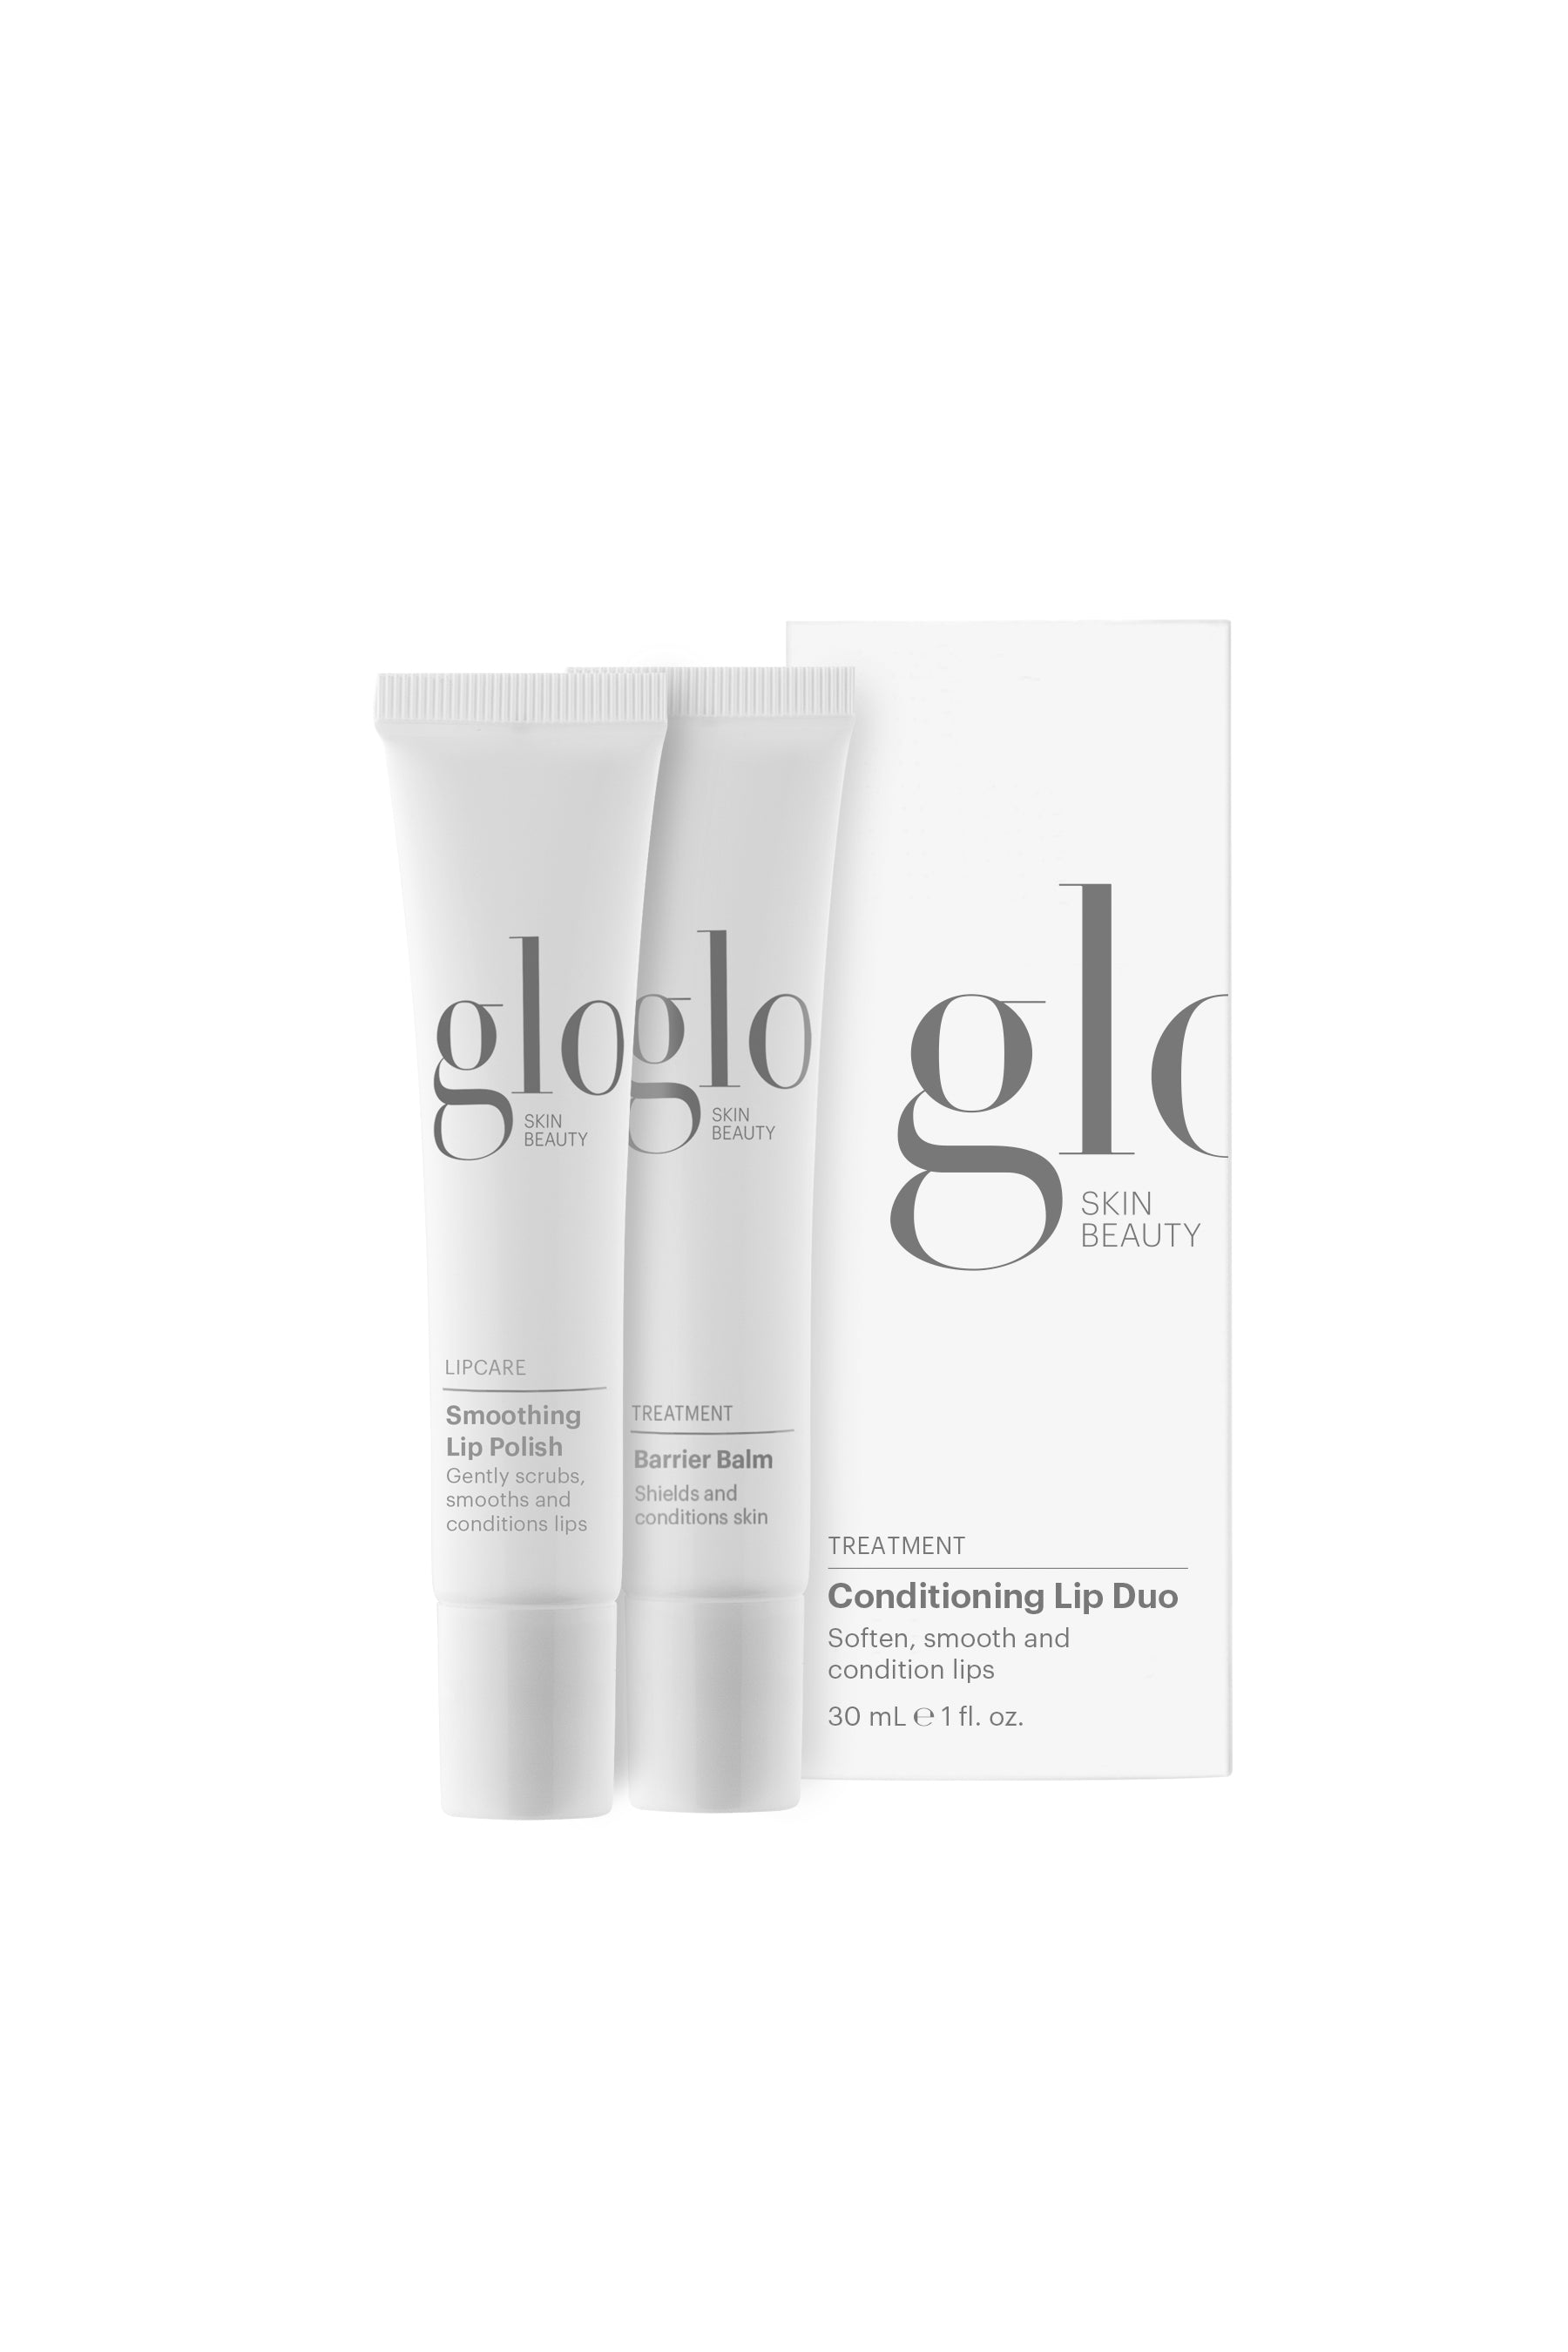 Glo Skin Beauty Conditioning Lip Duo